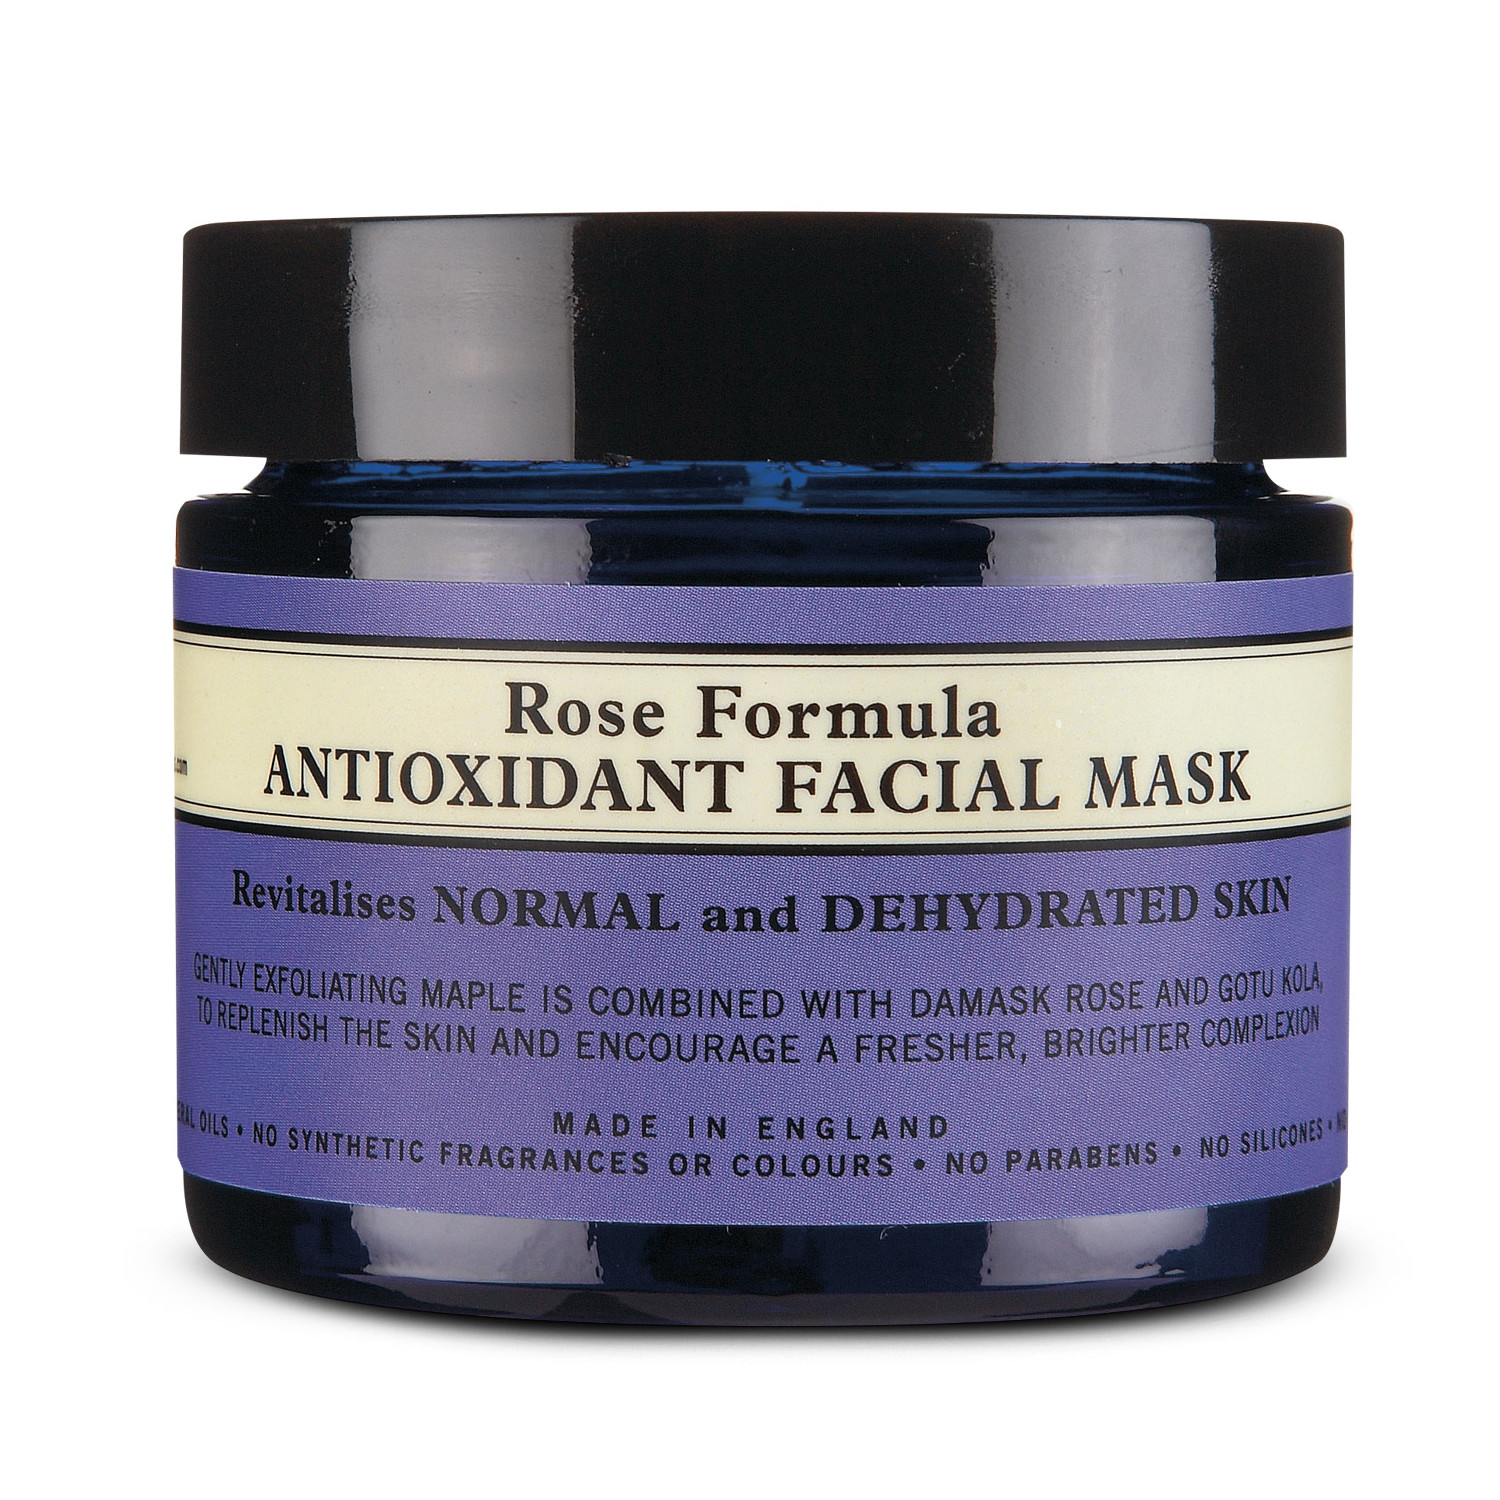 Neal's Yard Remedies Rose Formula Antioxidant Facial Mask 50g